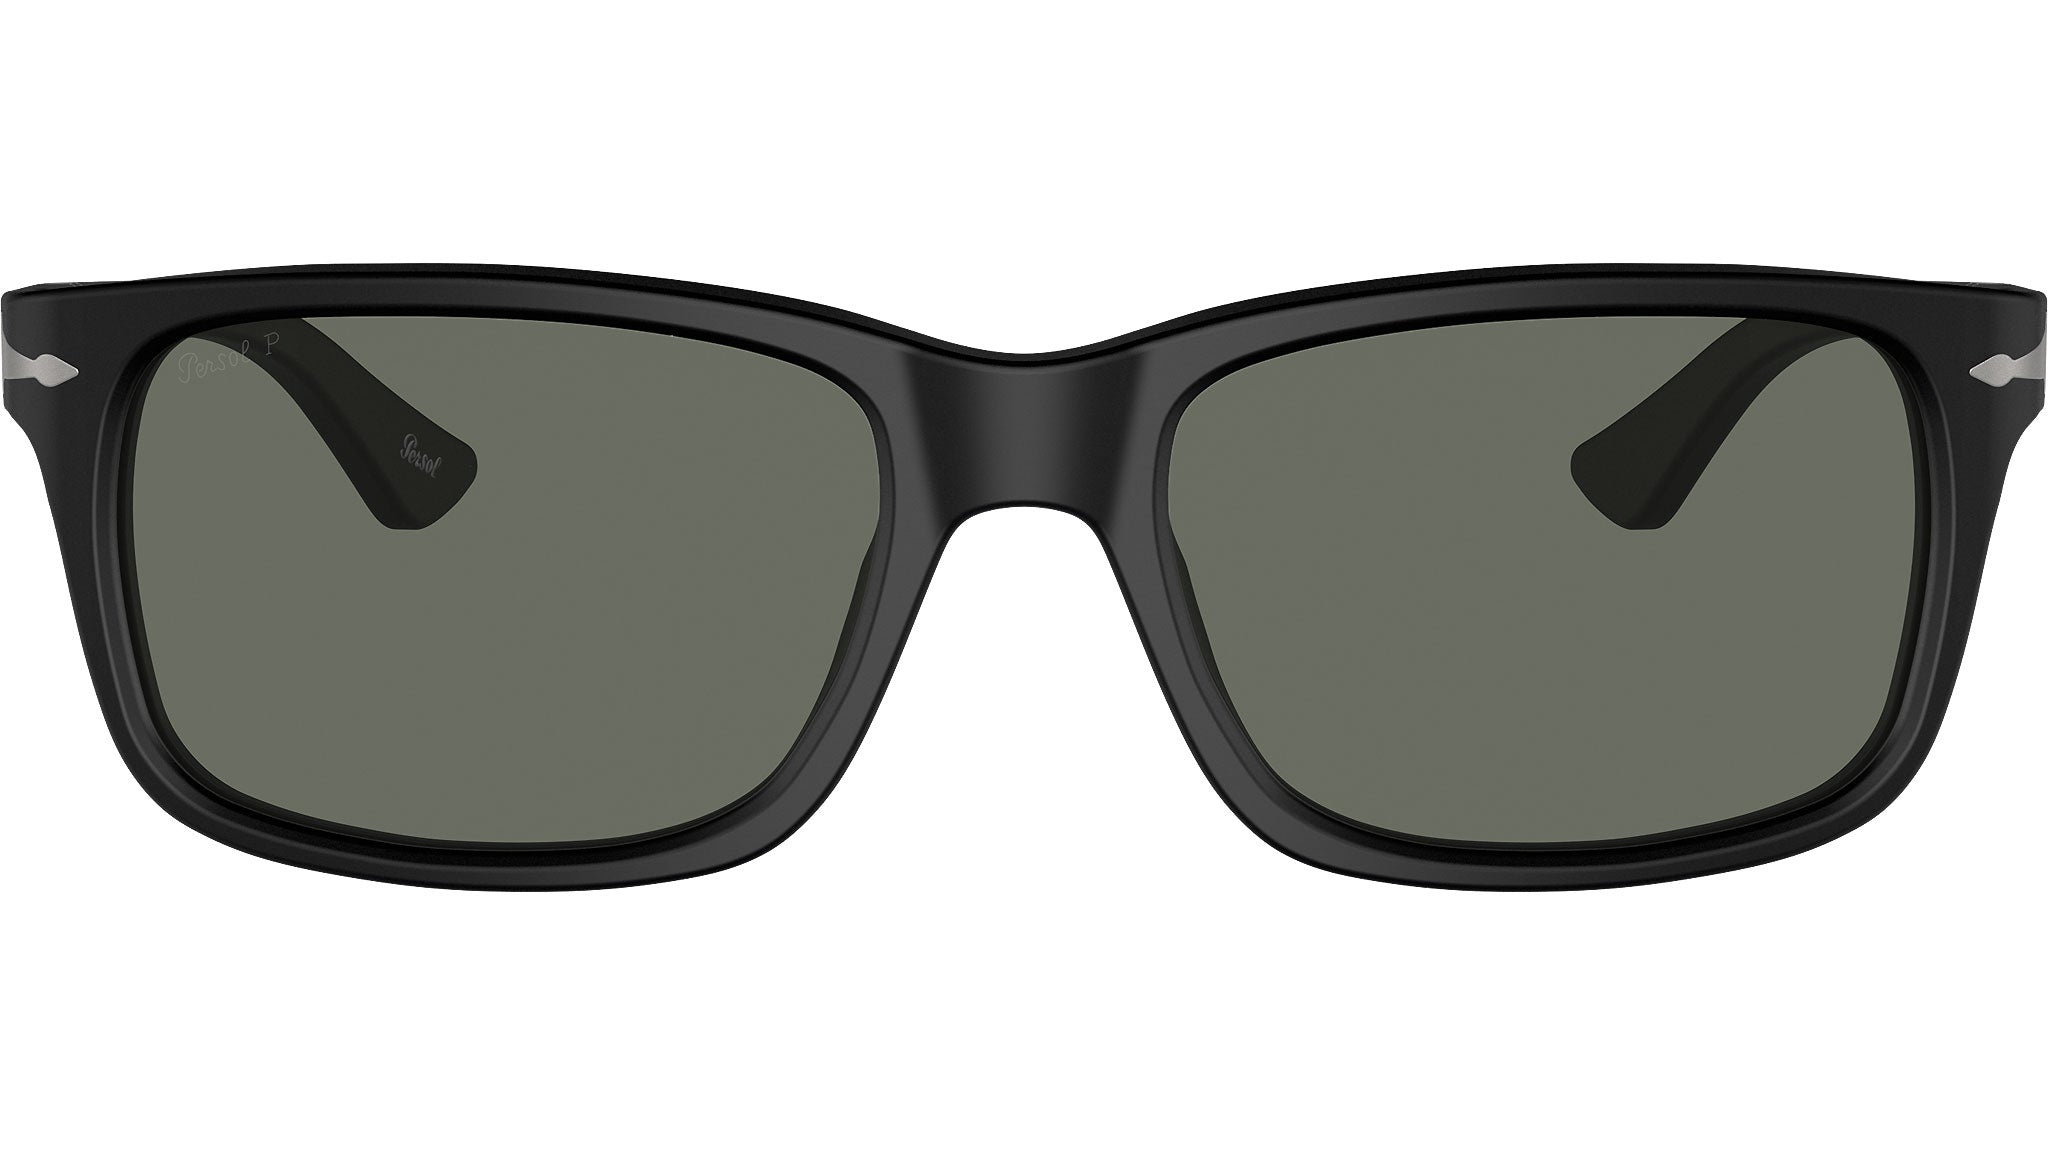 Sunglasses PO3048S Polar Green Lens